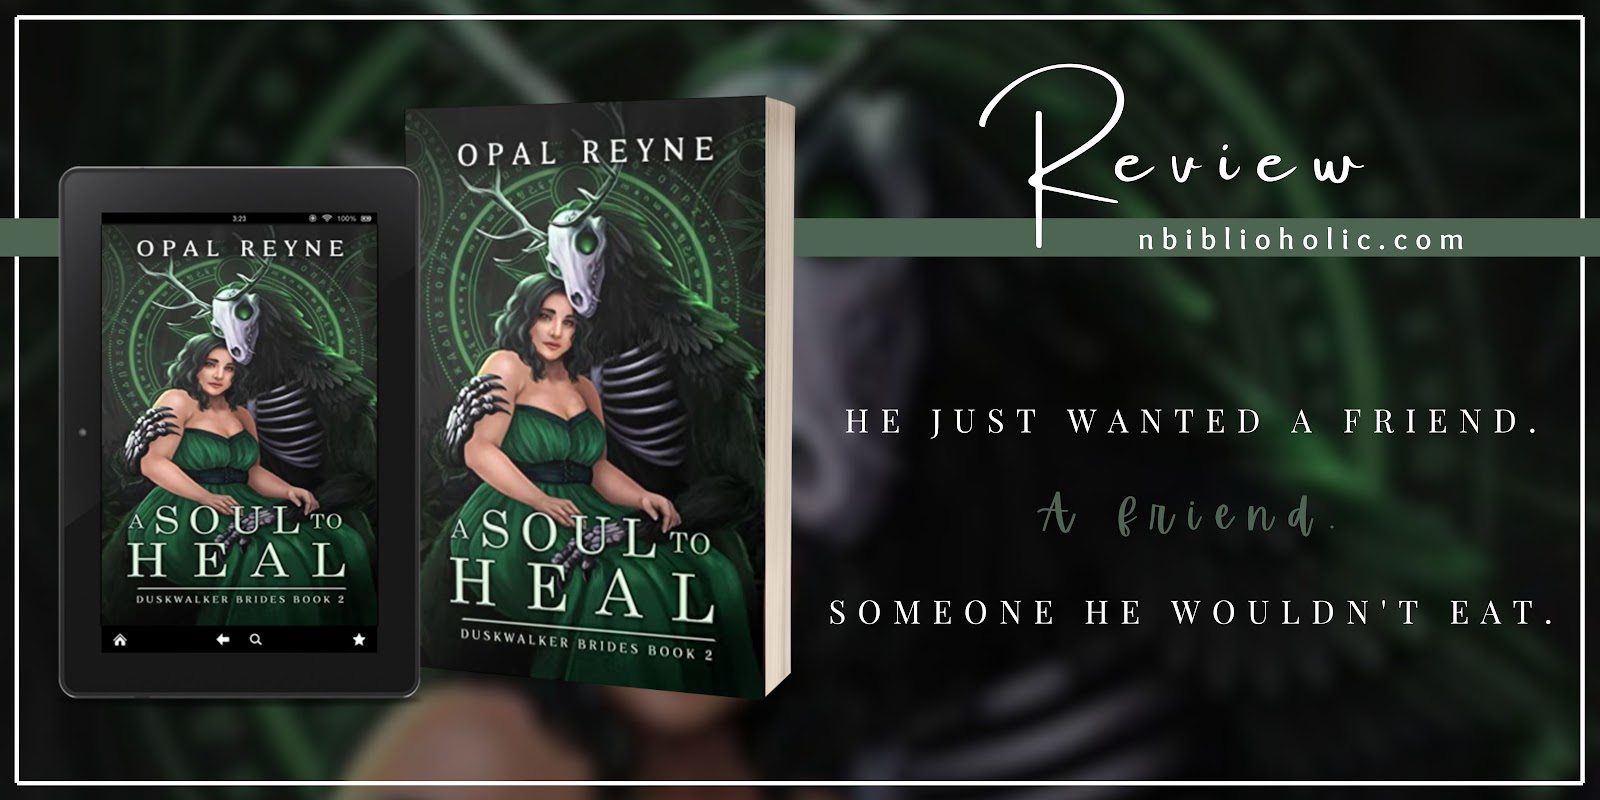 A Soul to Heal by Opal Reyne